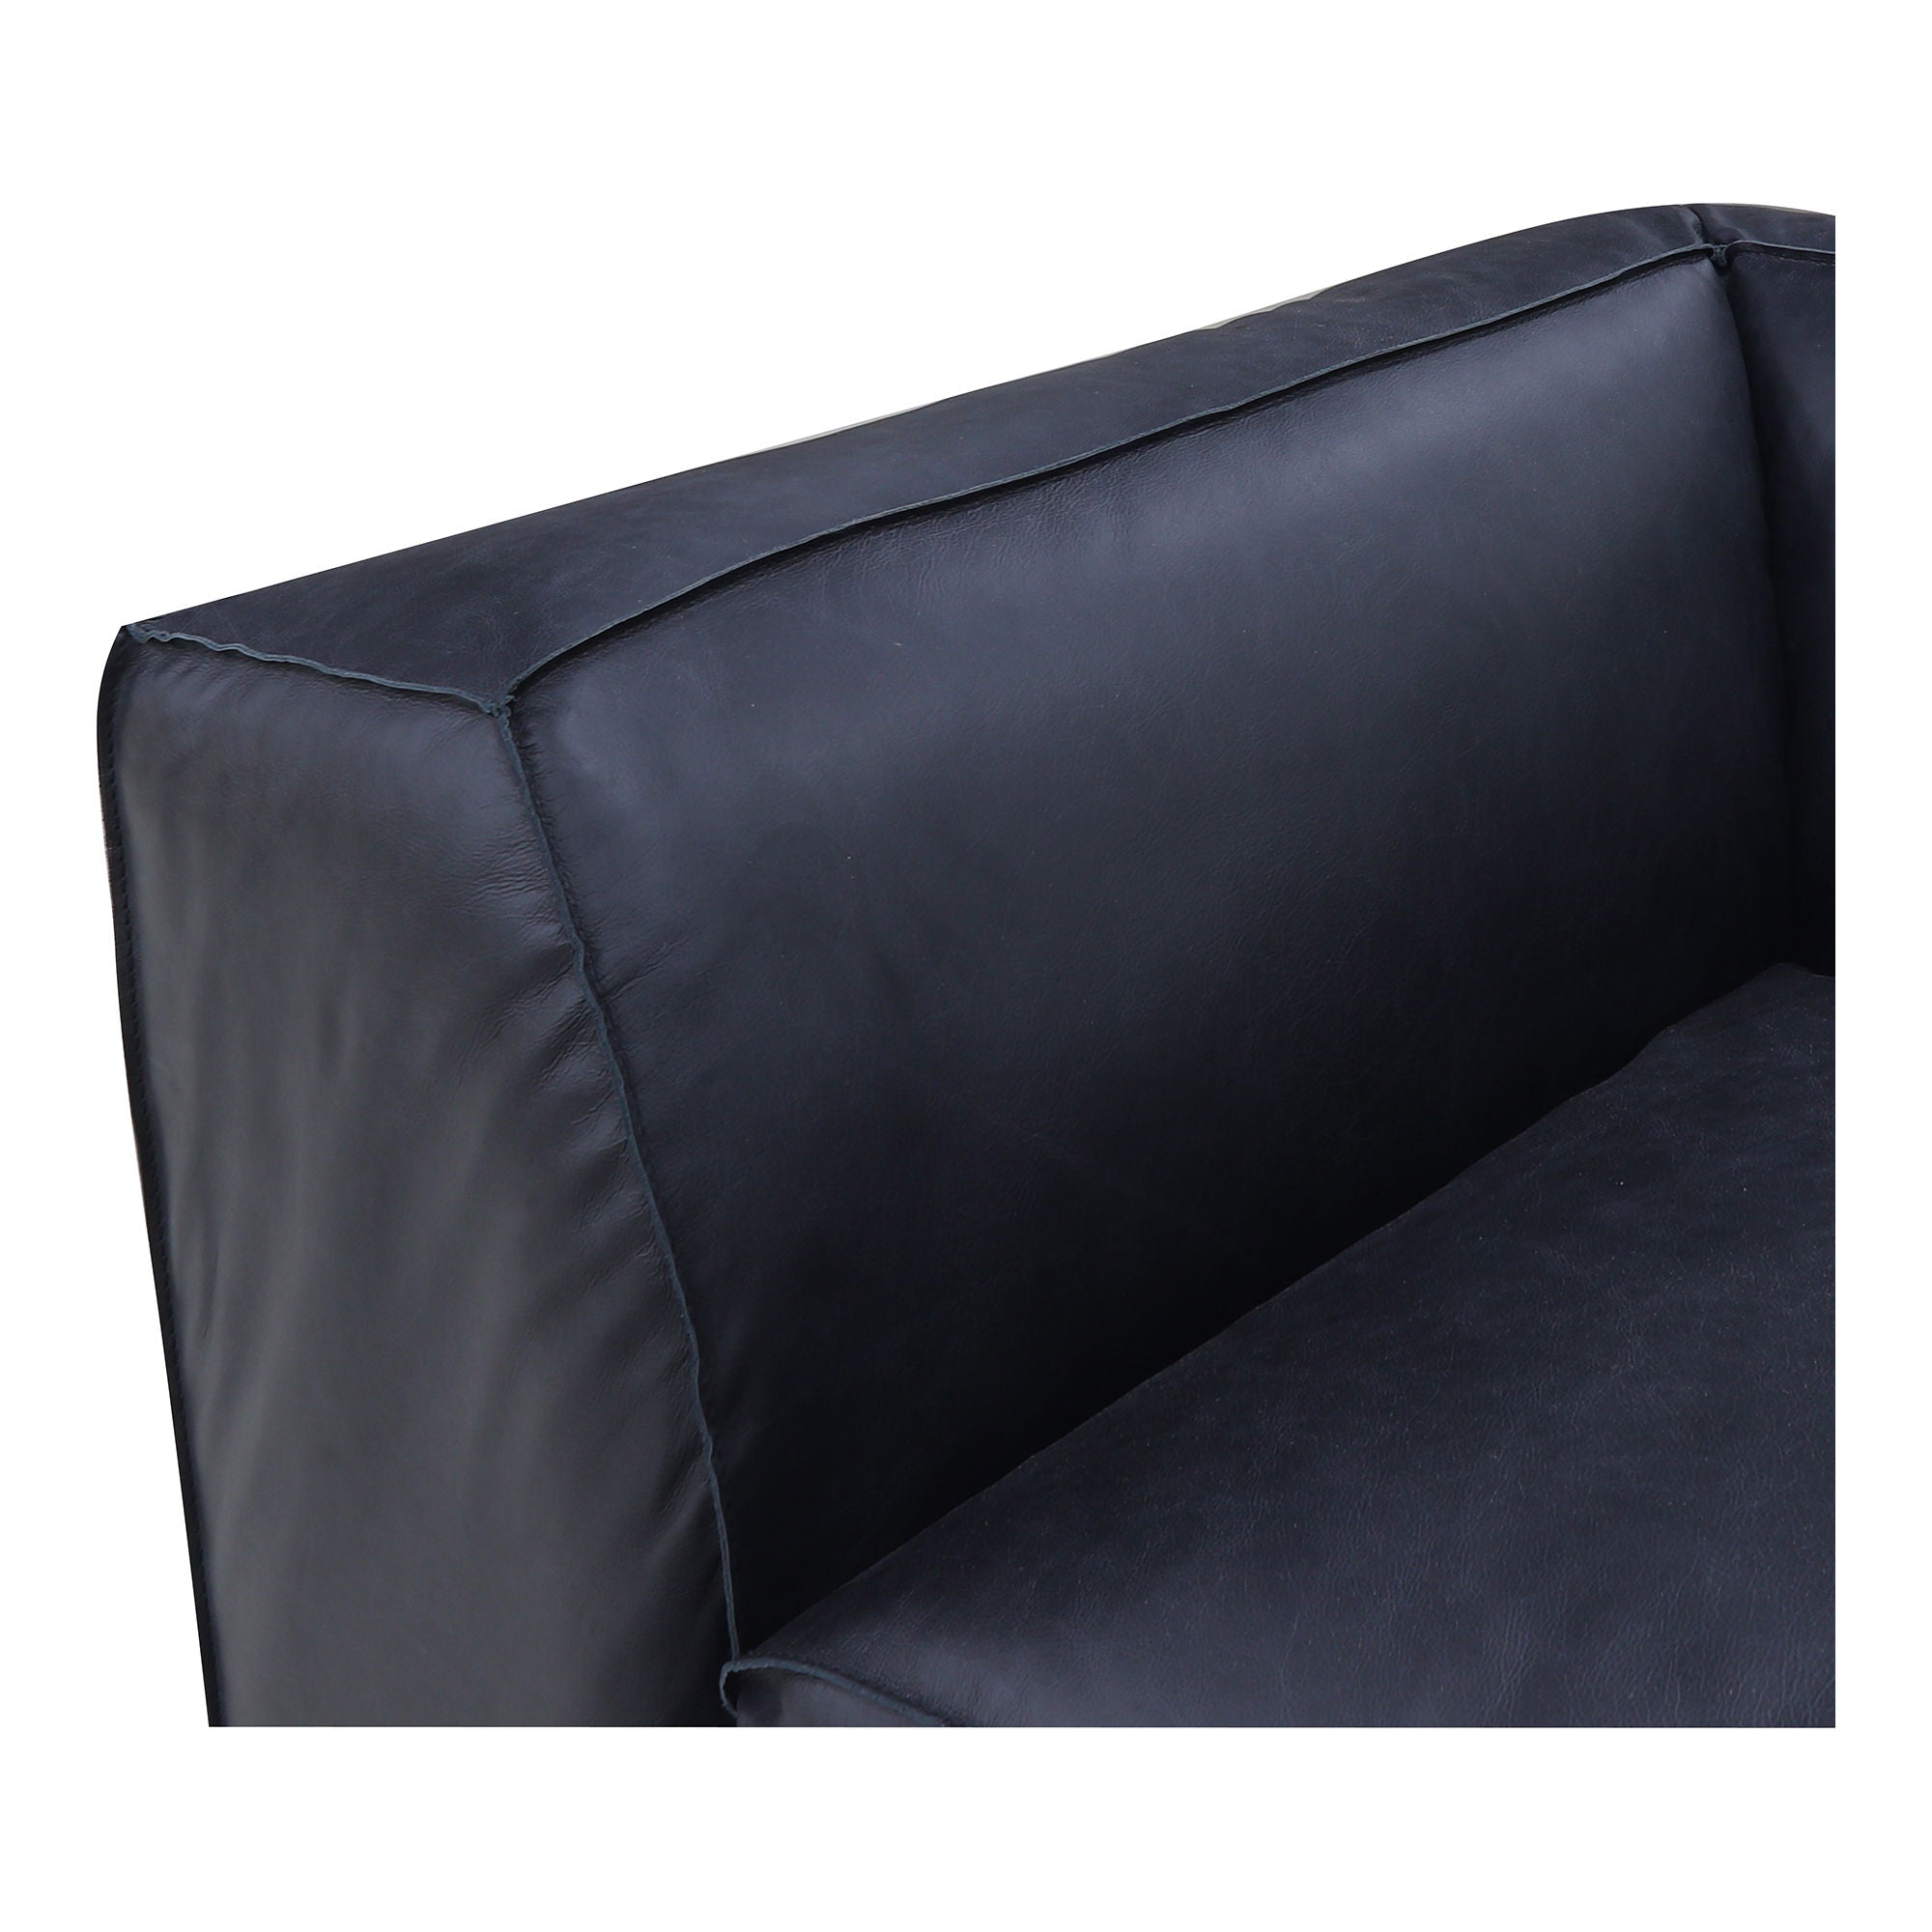 Form - Dream Modular Sectional Vantage Leather - Black